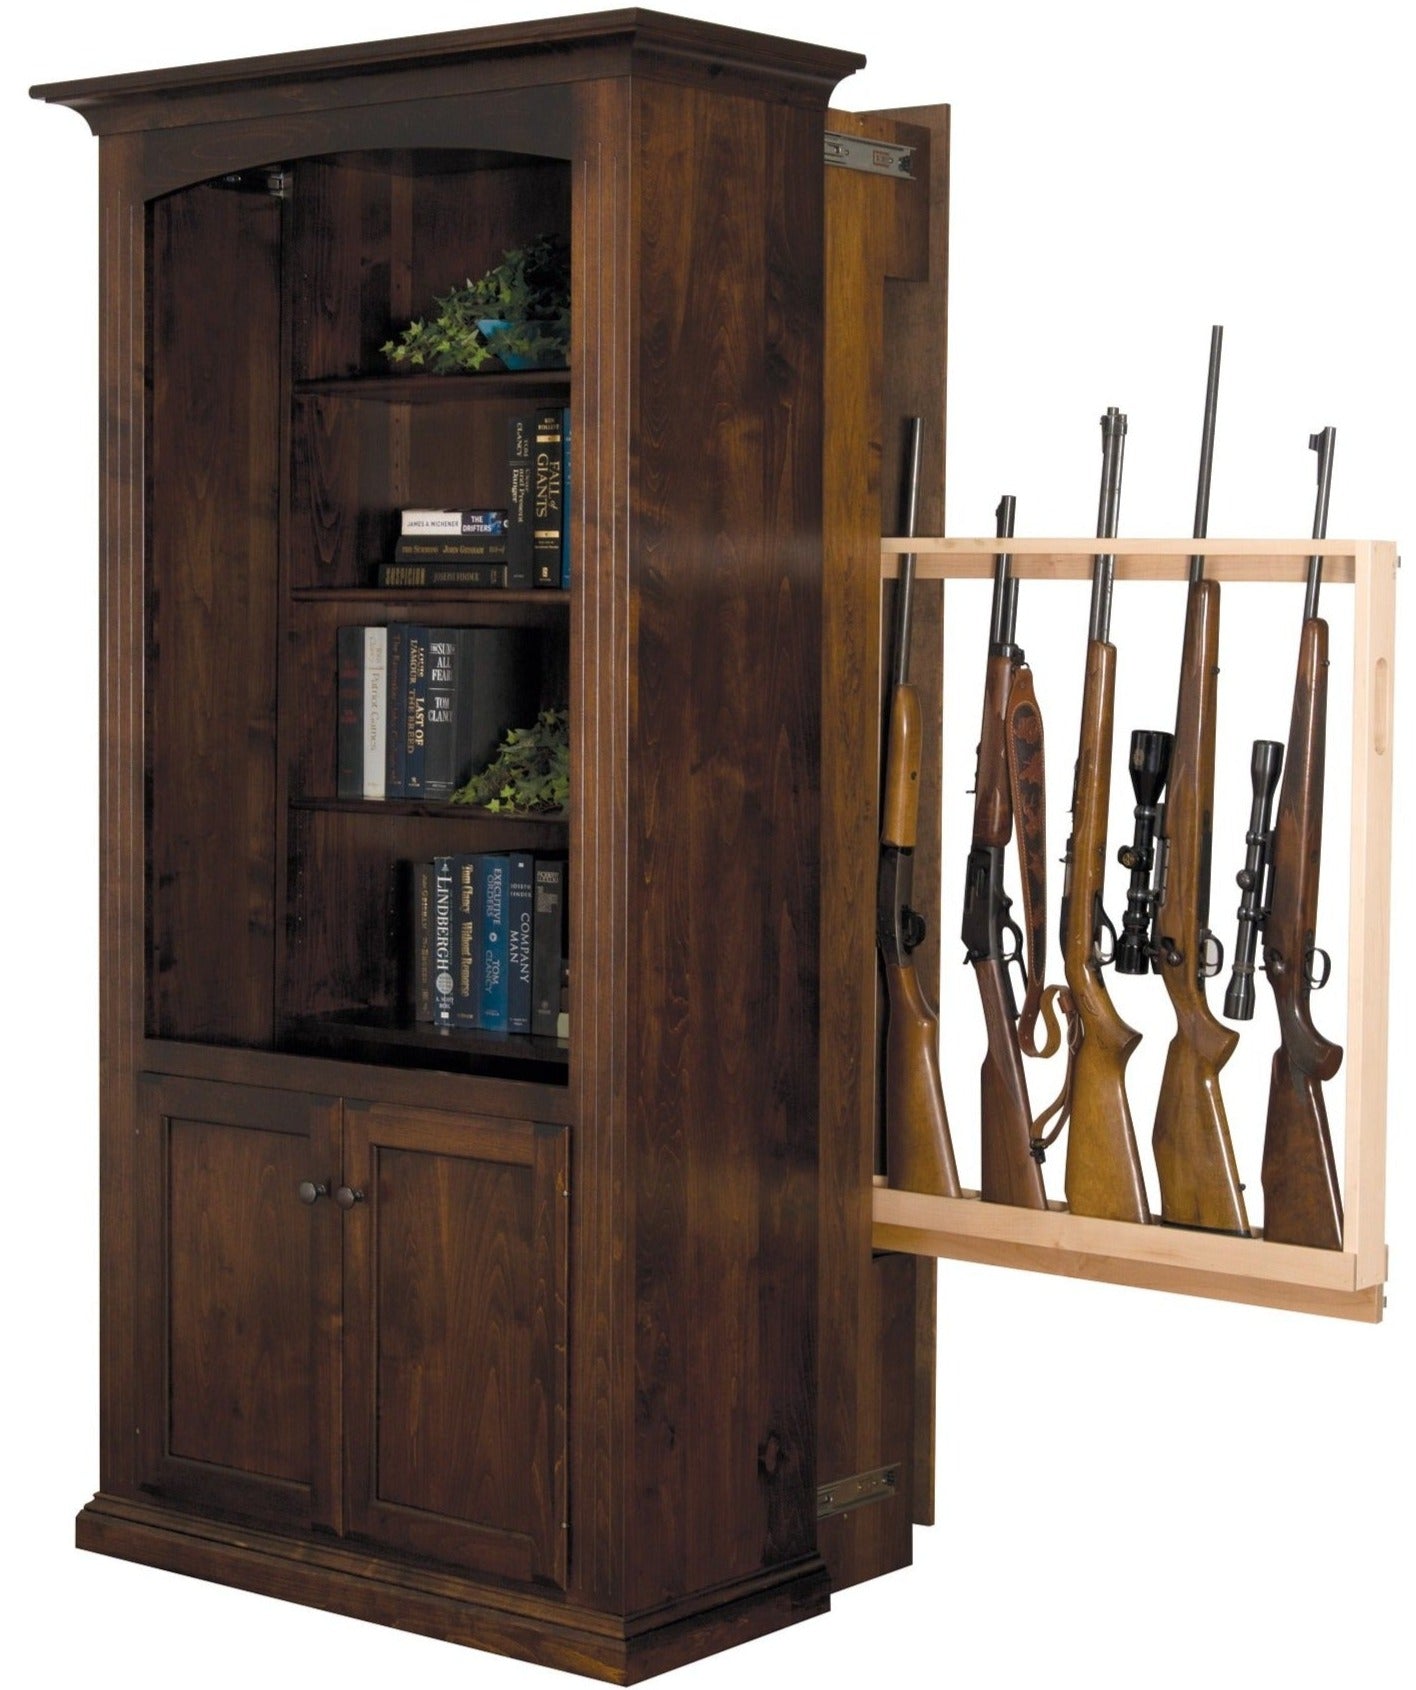 Covert - Bookcase with Hidden Gun Rack - The Wood Reserve